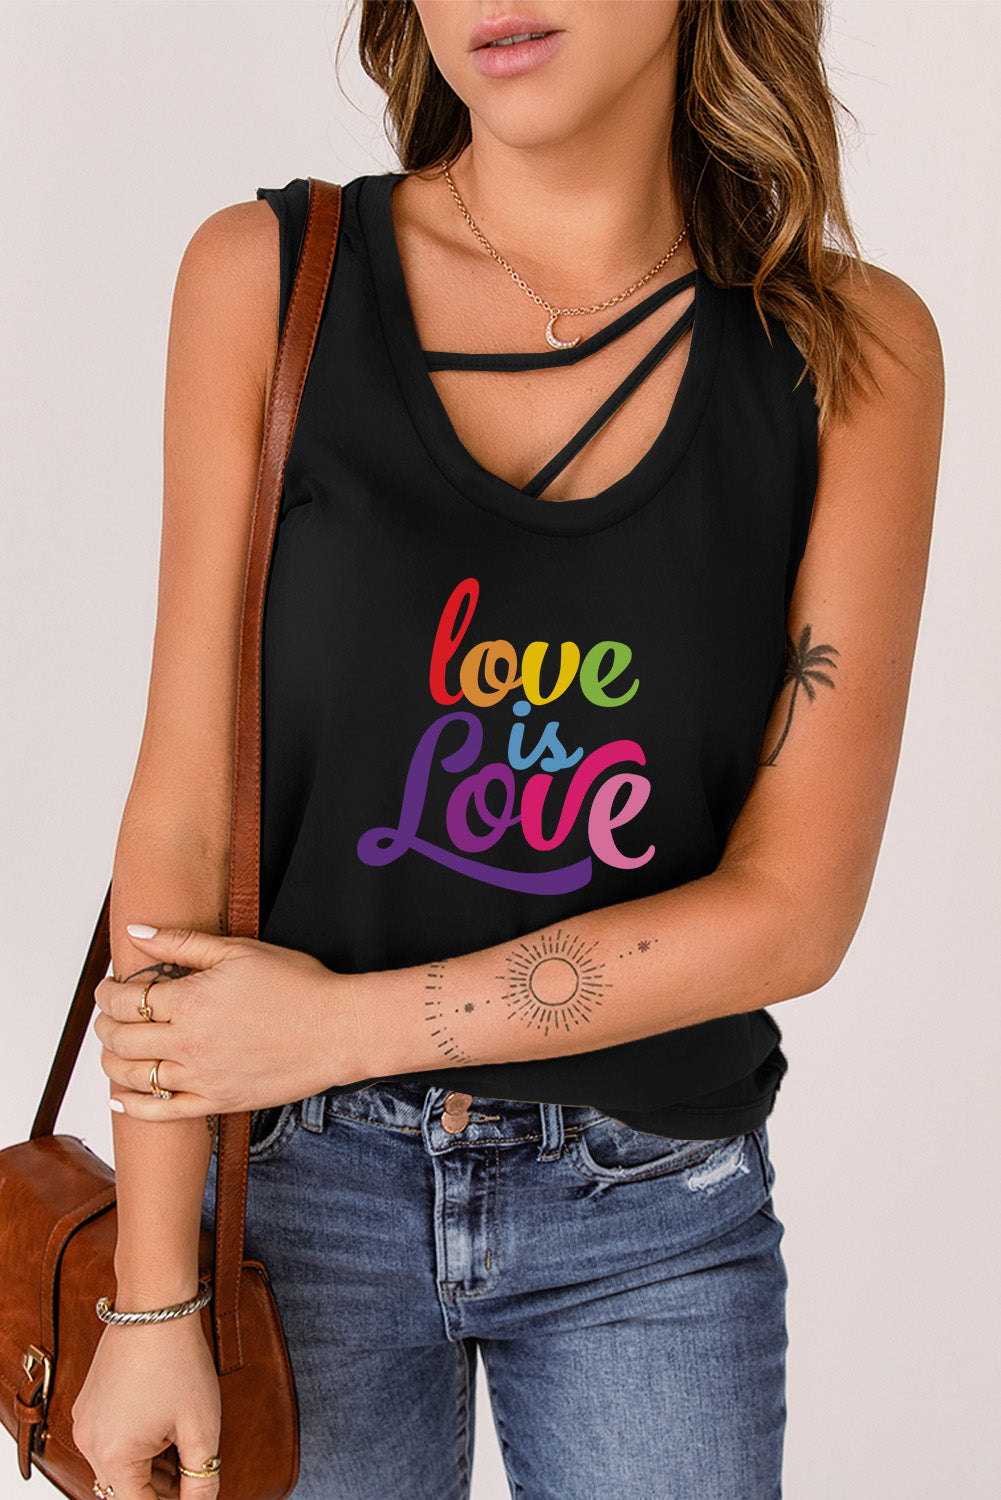 LC2566508-2-S, LC2566508-2-M, LC2566508-2-L, LC2566508-2-XL, LC2566508-2-2XL, Black Pride Tank Tops Shirt Love is Love Women Rainbow Graphic Tee Strappy Casual Sleeveless Tops